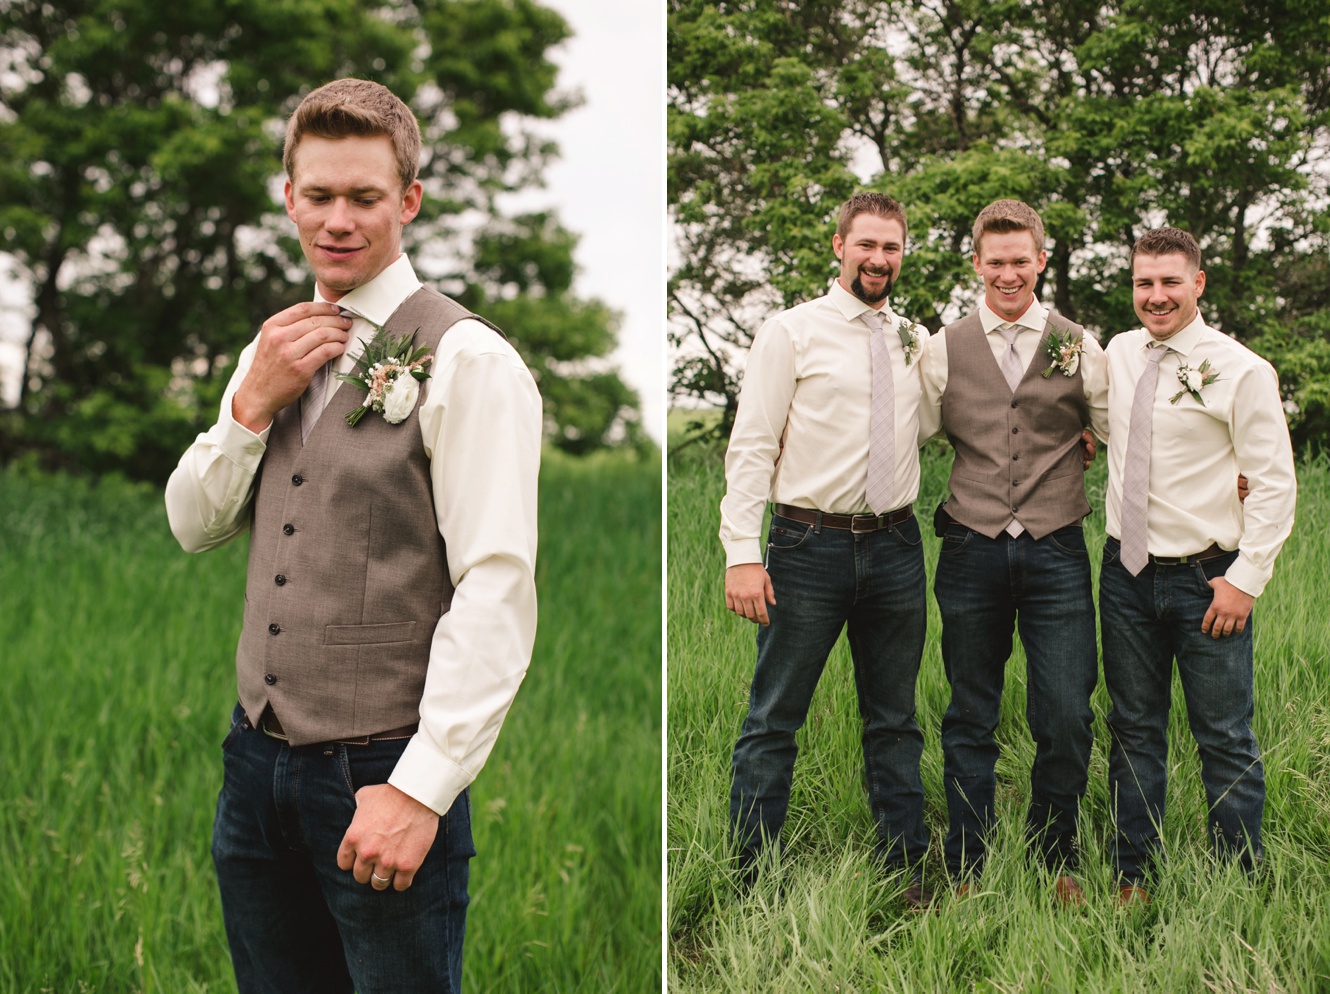 Rustic wedding groomsmen suits photo